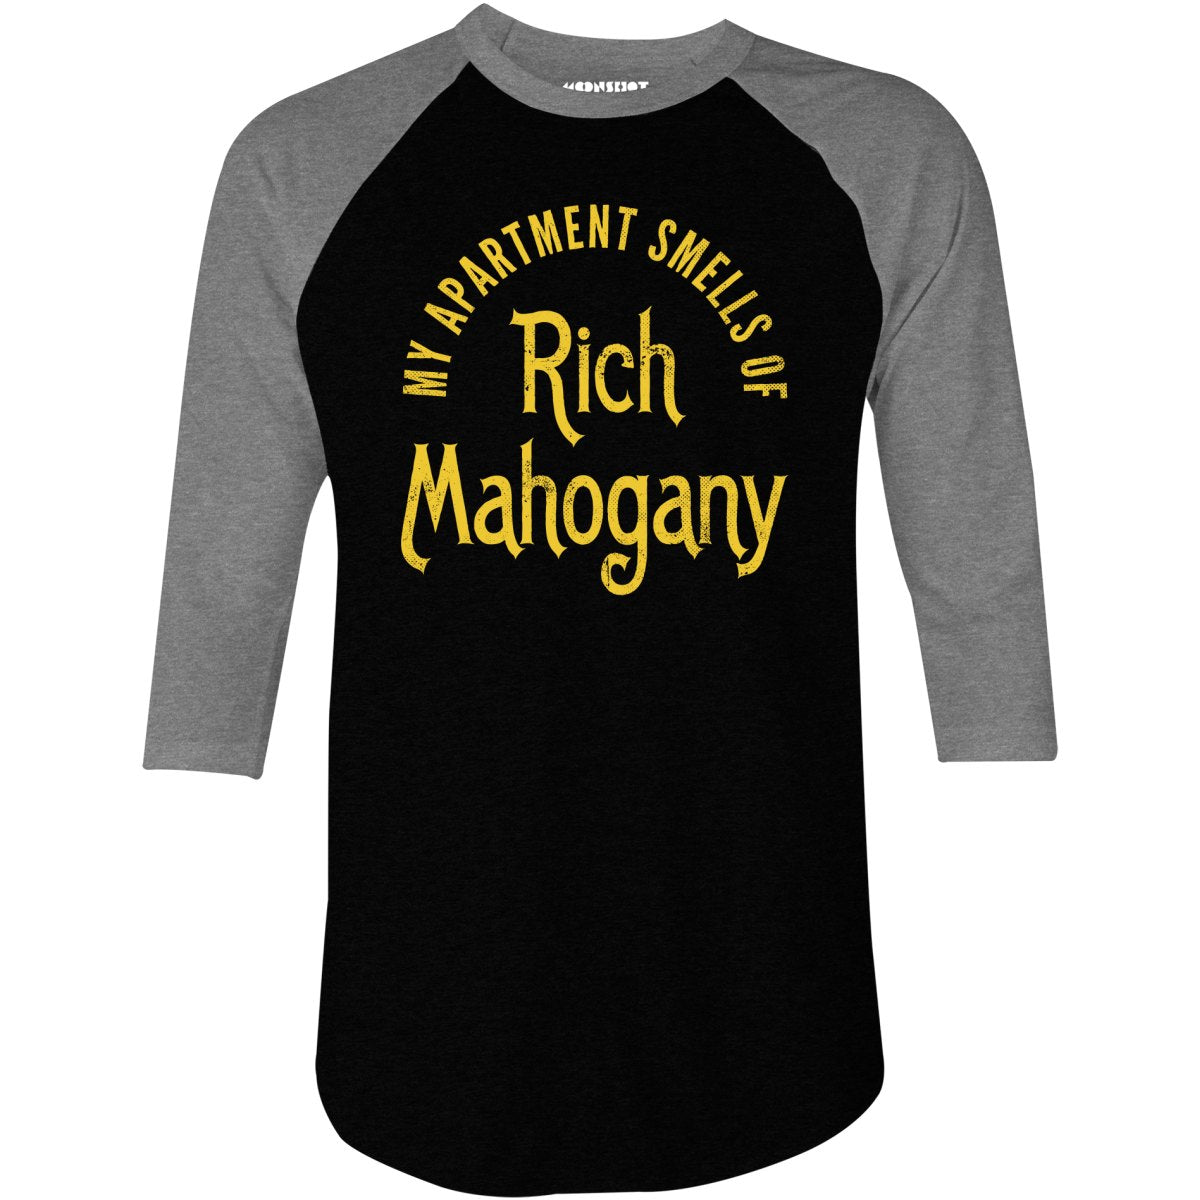 My Apartment Smells of Rich Mahogany - 3/4 Sleeve Raglan T-Shirt